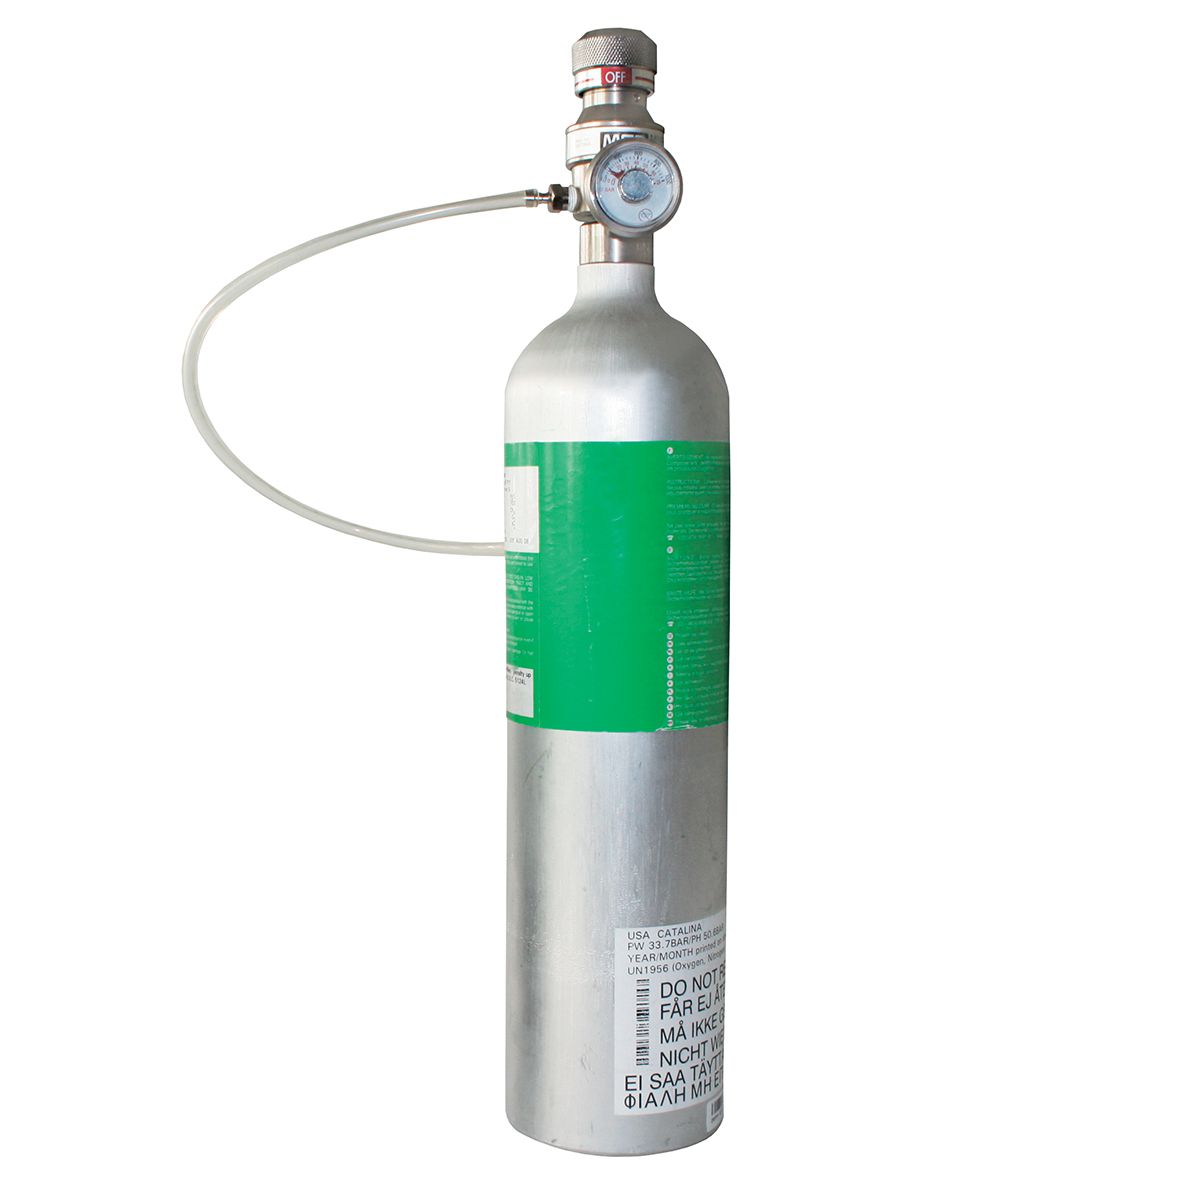 MSA Misch-Gasflasche - 58 L - 0,4 Vol.-% C3H8, 60 ppm CO, 20 ppm H2S in Luft (Prüfgas)